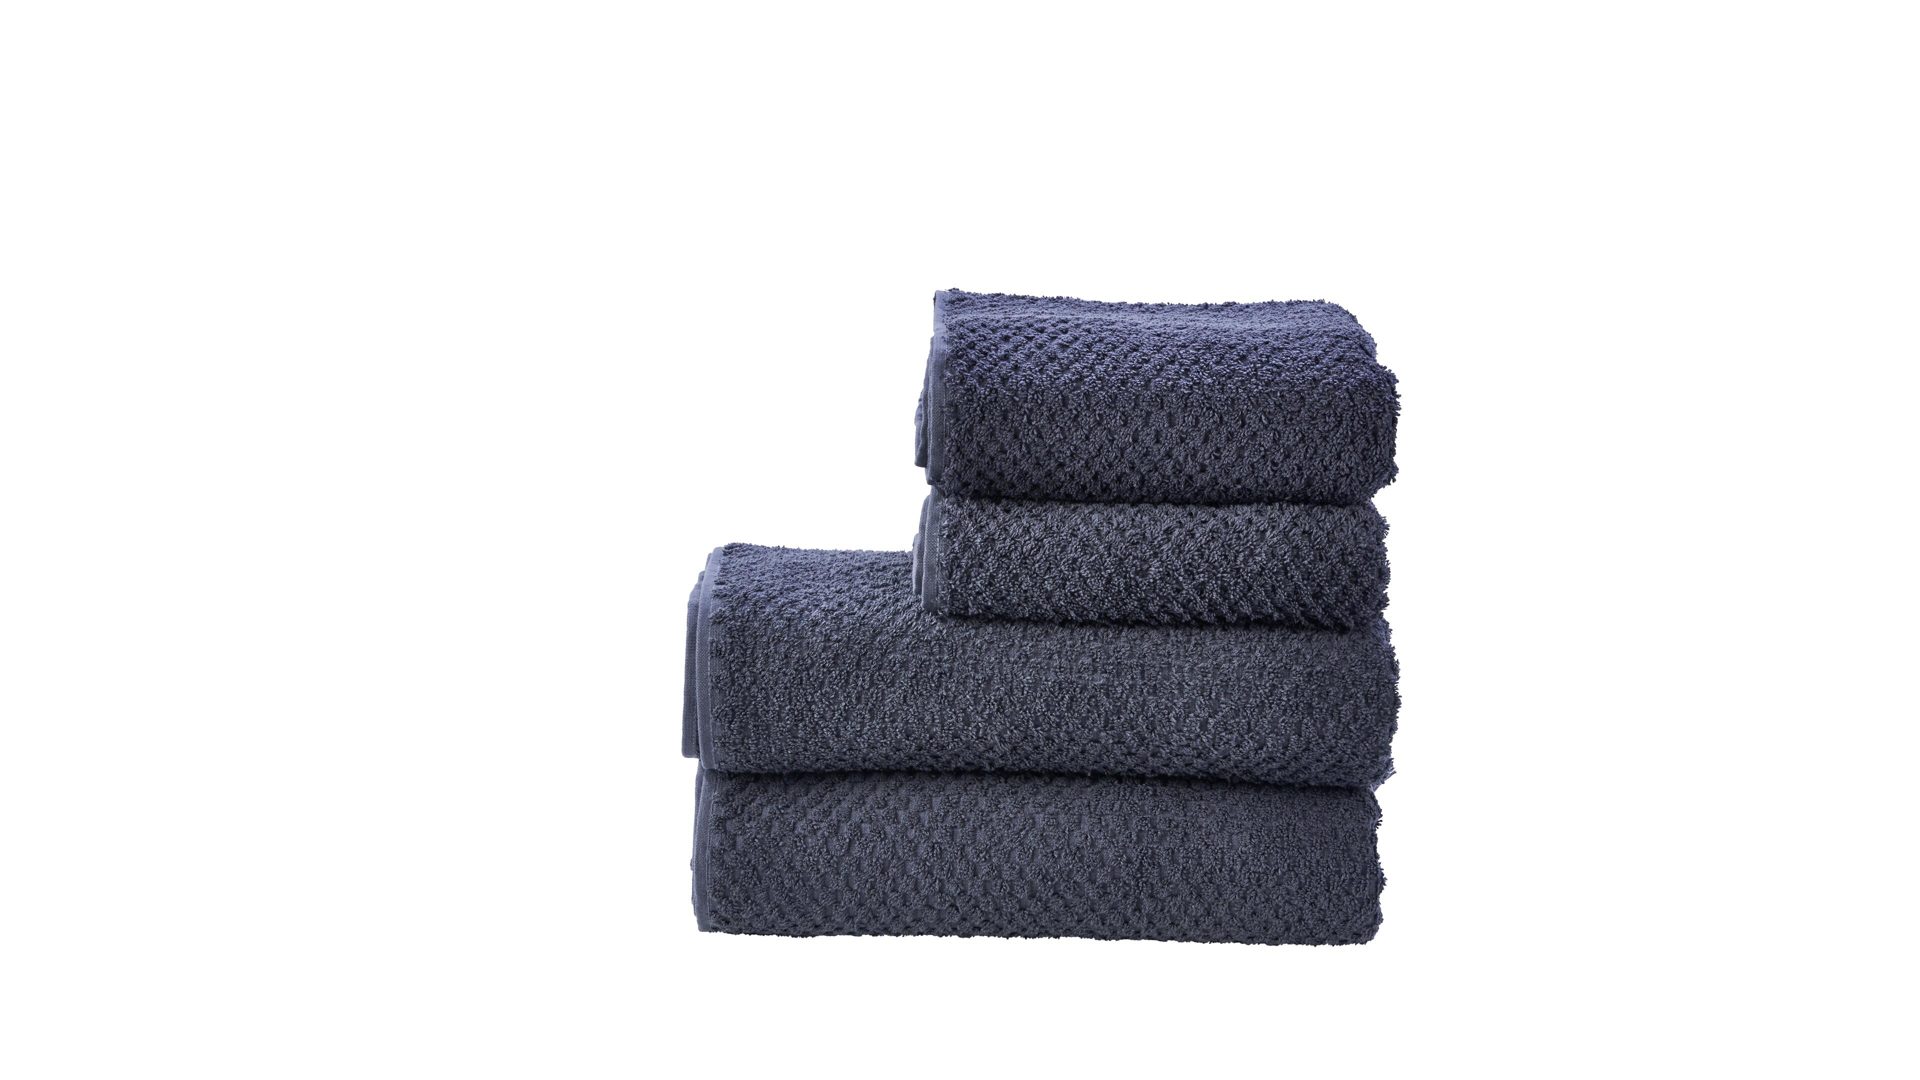 Handtuch-Set Done® by karabel home company aus Stoff in Anthrazit DONE® Handtuch-Set Provence Honeycomb anthrazitfarbene Baumwolle  – vierteilig